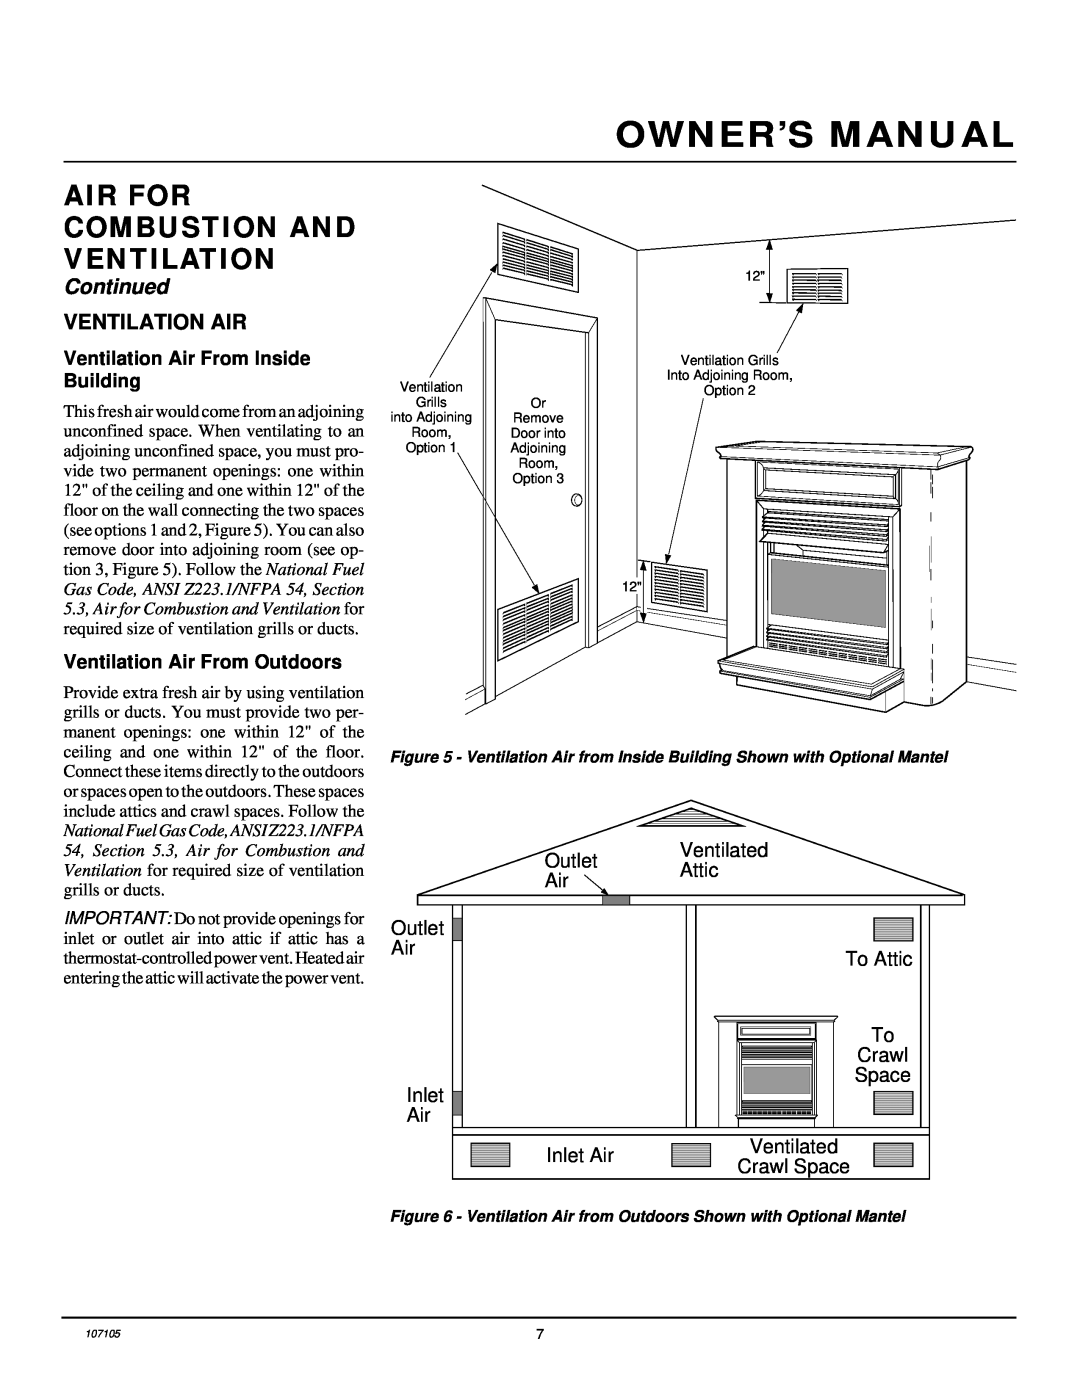 Desa FMH26TN Ventilation Air From Inside Building, Ventilation Air From Outdoors, Air For Combustion And Ventilation 